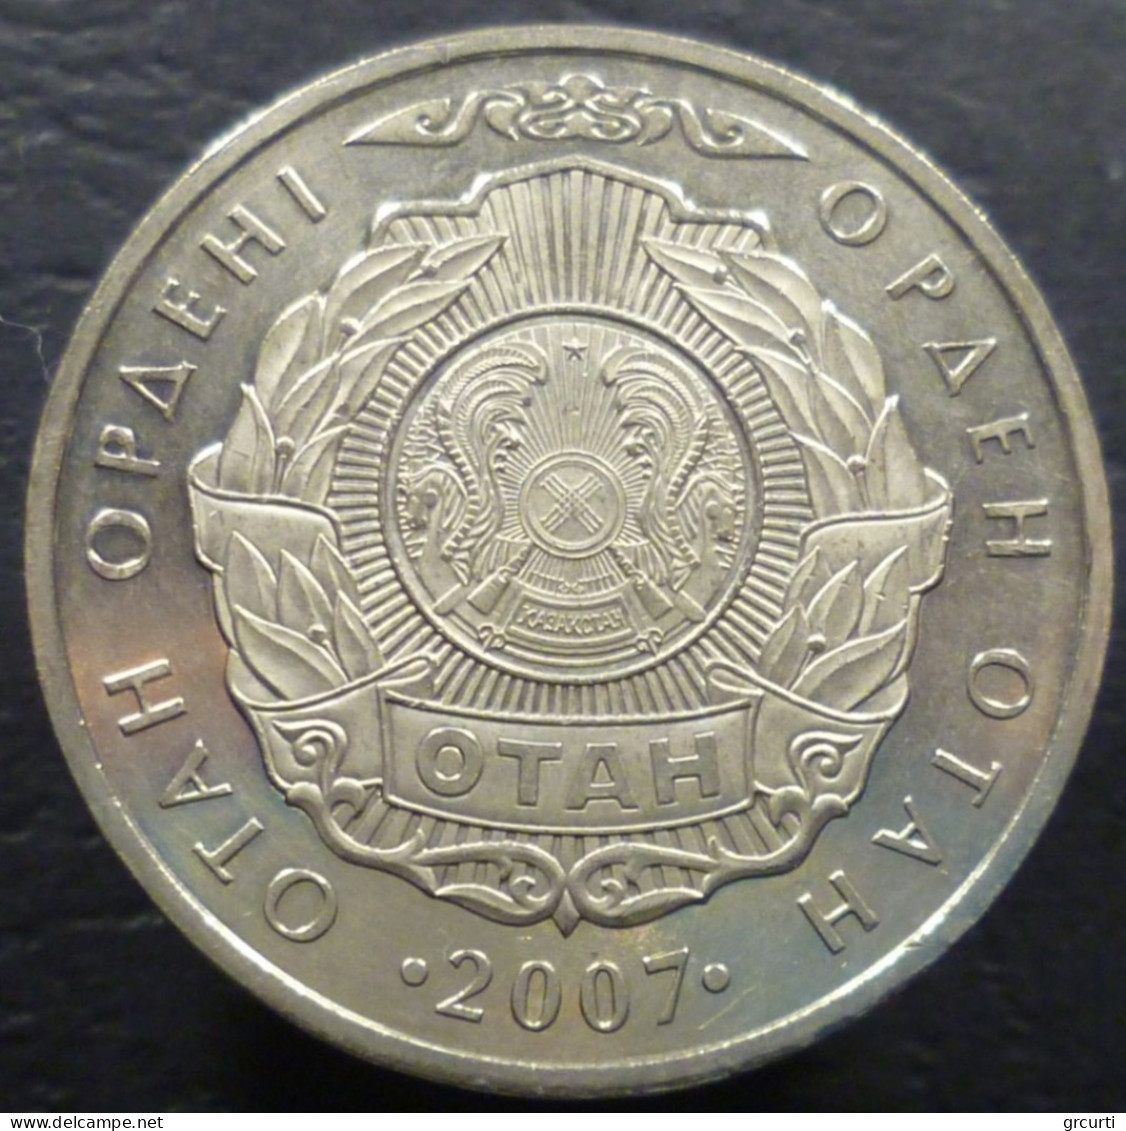 Kazakistan - 50 Tenge 2007 - Serie D'onorificenze - Ordine Della Patria (Отан ордені) - KM# 165 - Kazajstán